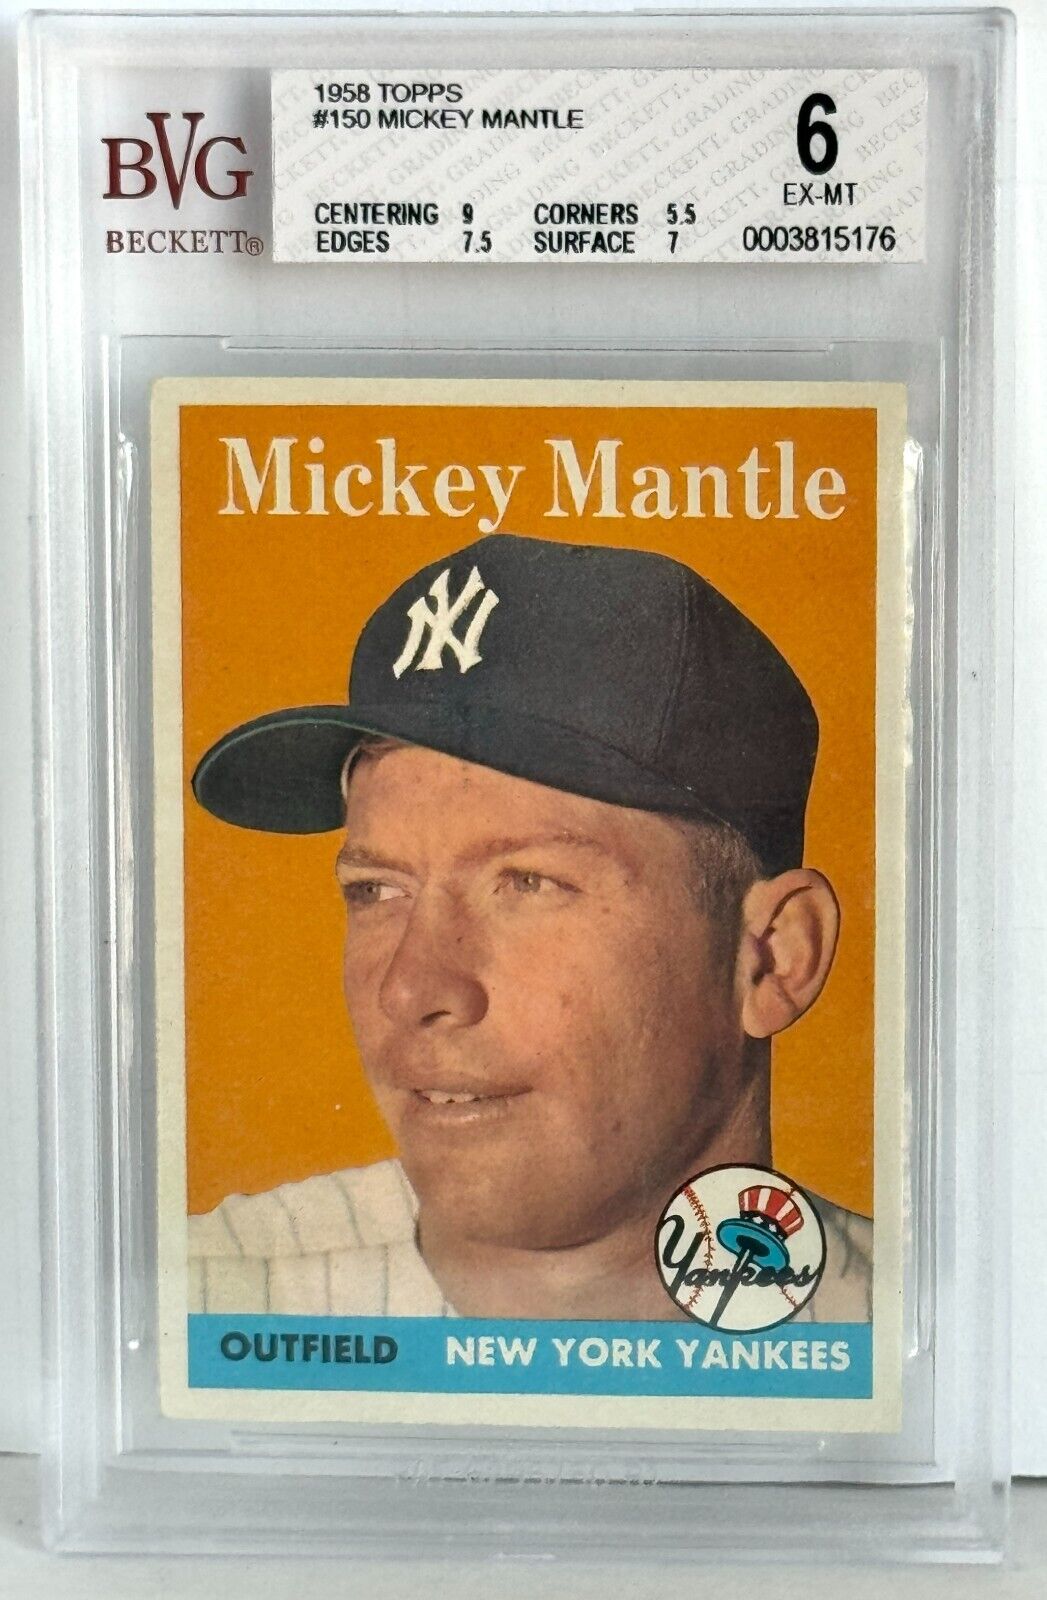 1958 Topps Mickey Mantle #150 Vintage MLB Baseball Card Graded Beckett BVG 6